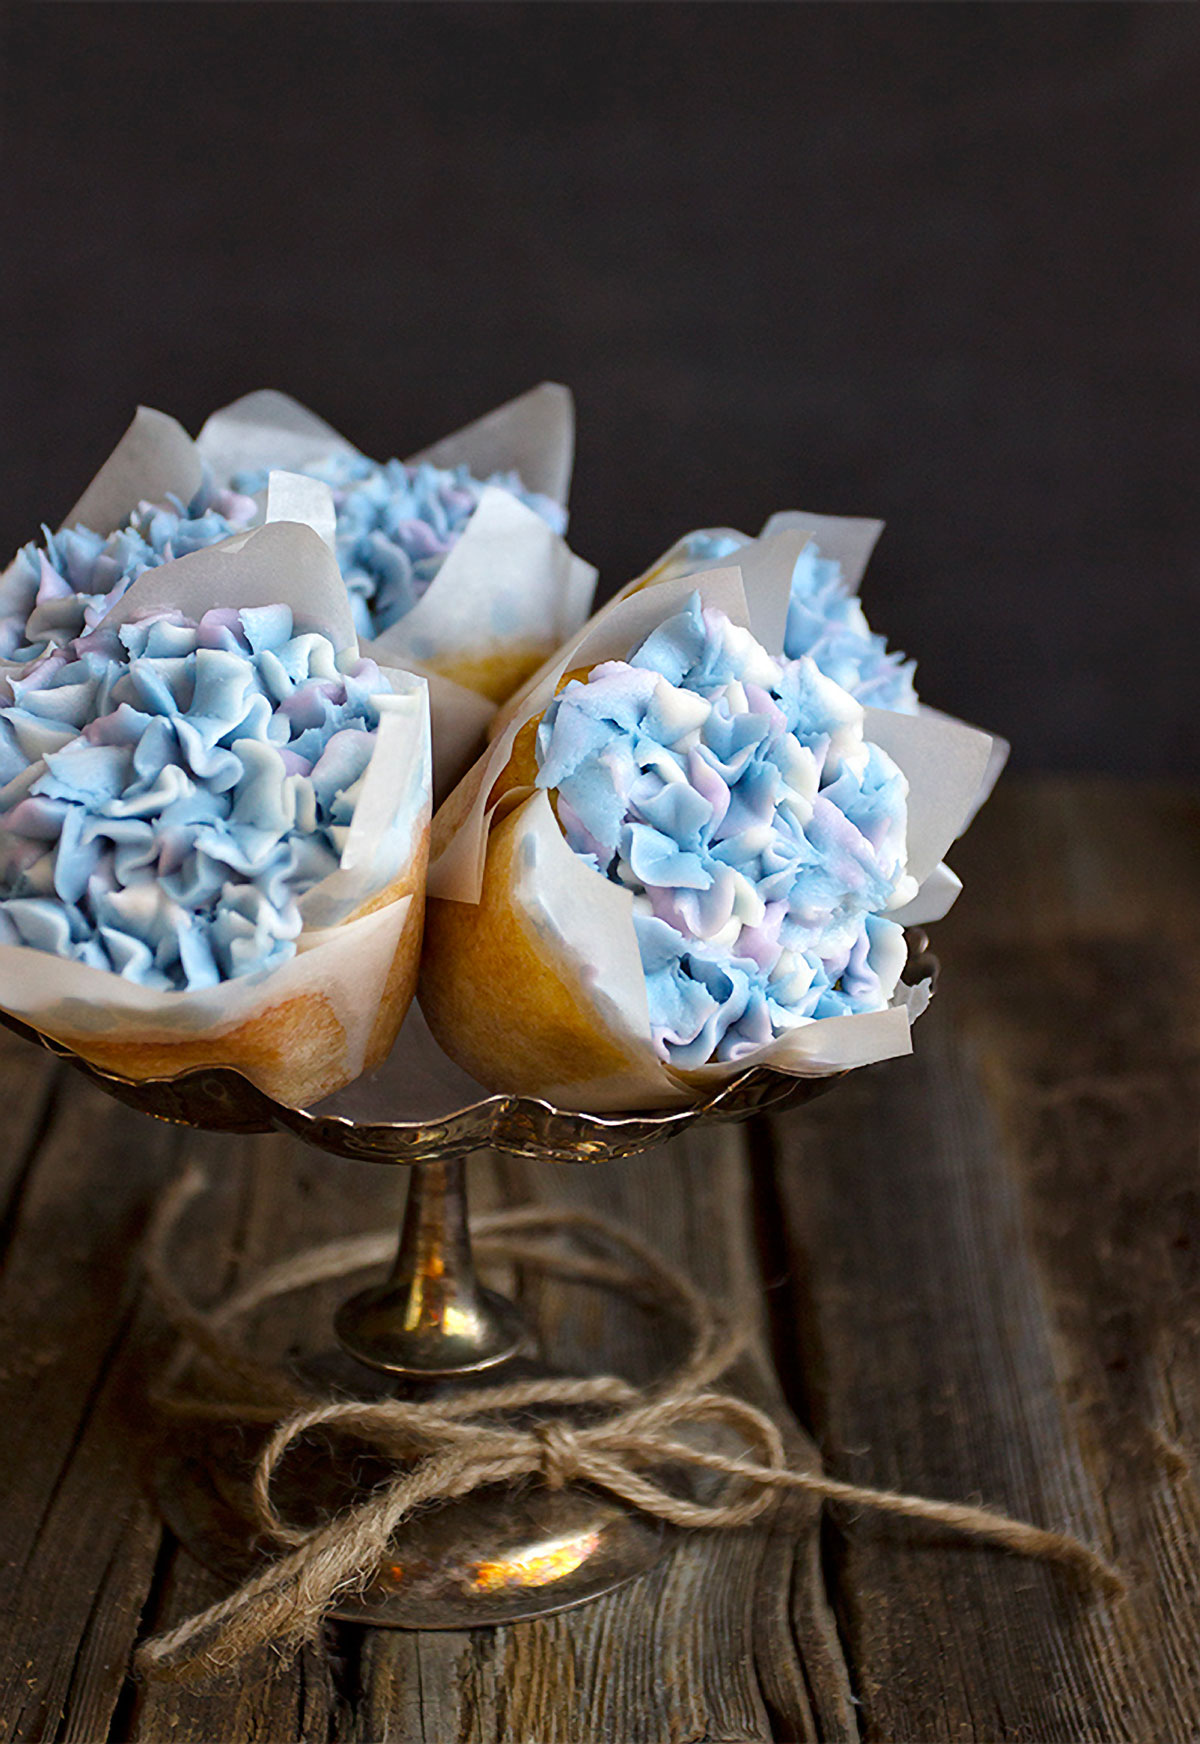 Hydrangea Cupcakes